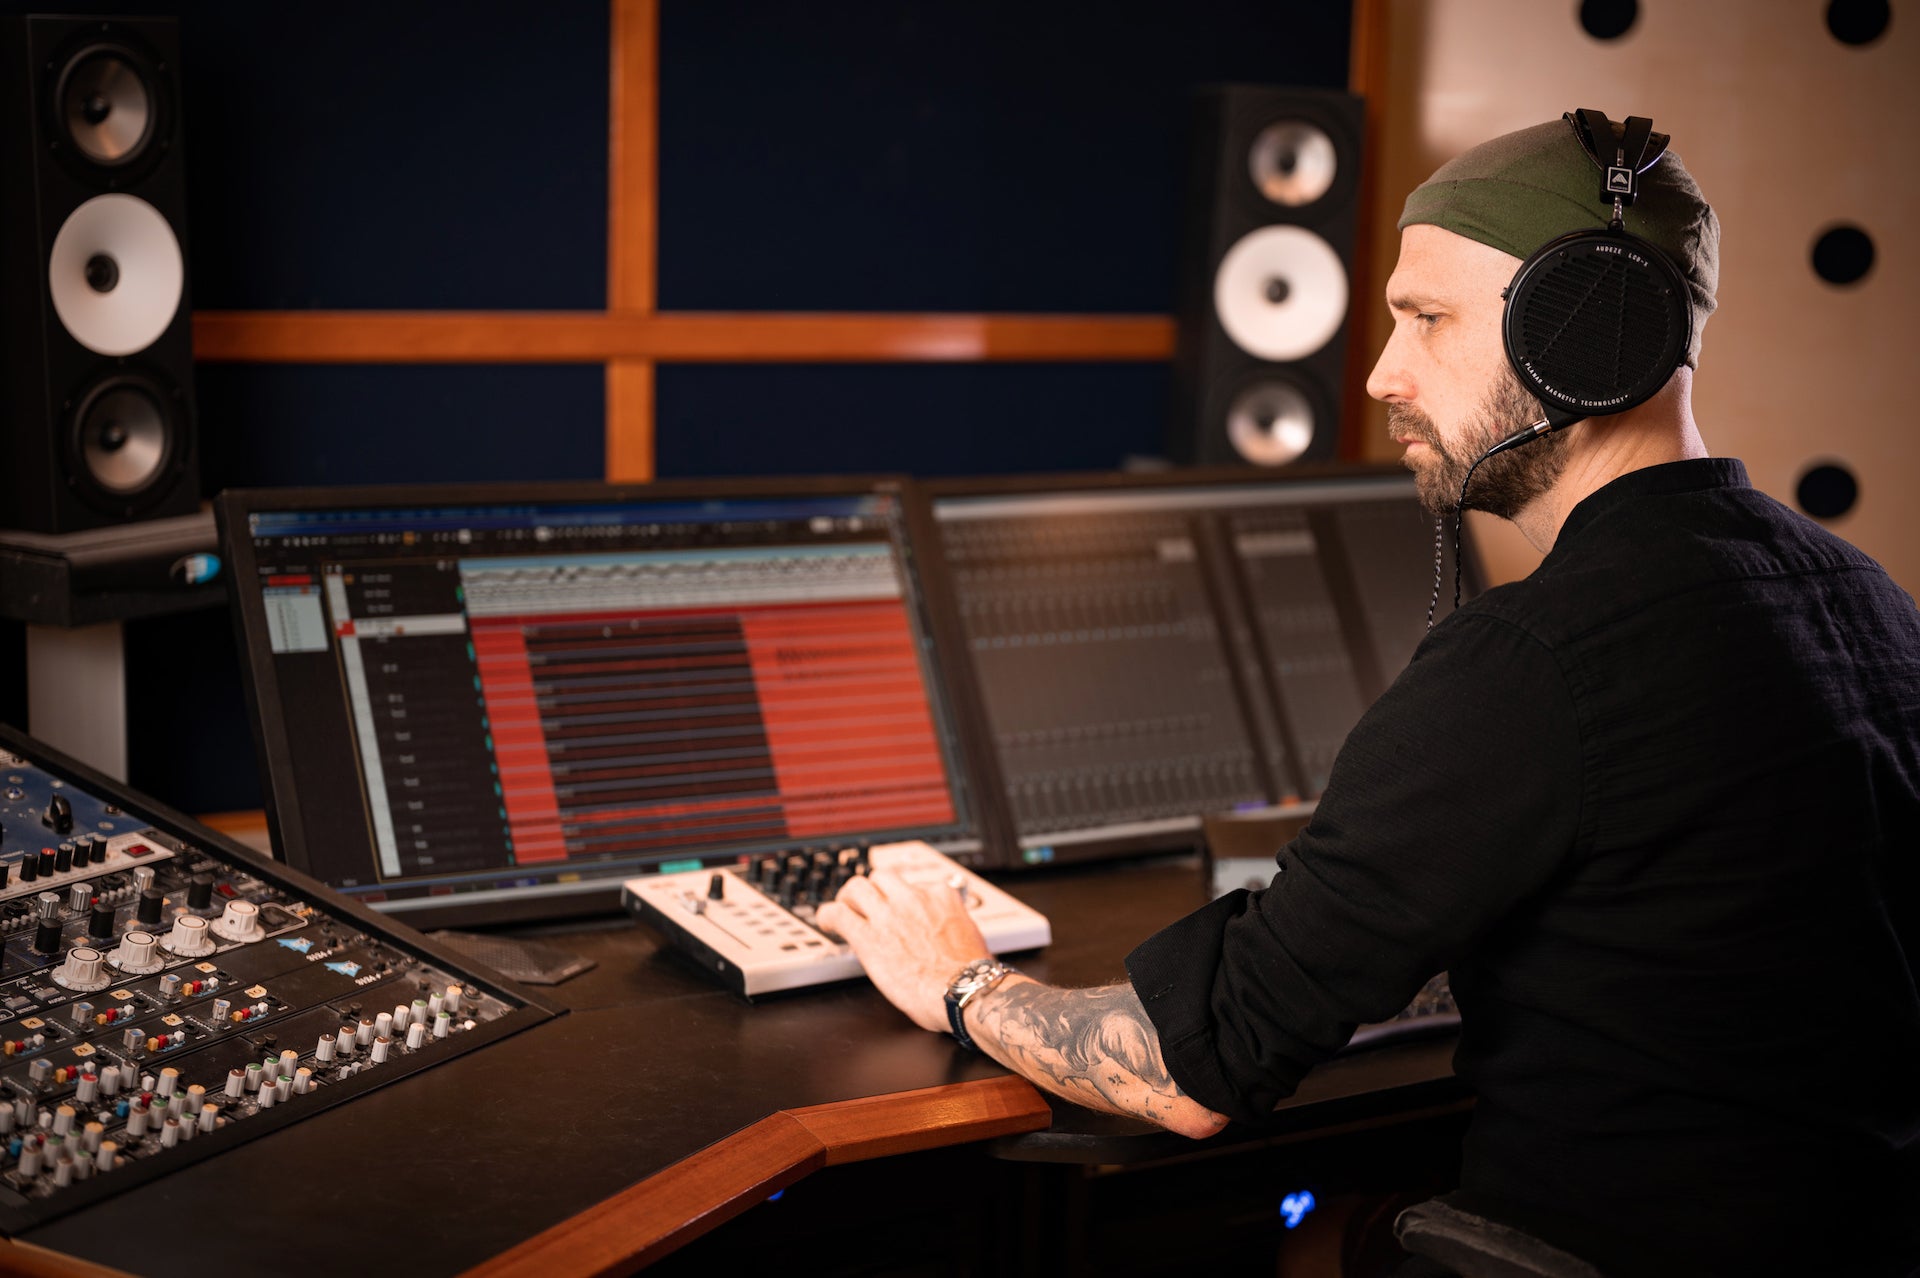 Kristian "Kohle" Bonifer in the studio with his Audeze LCD-X headphones